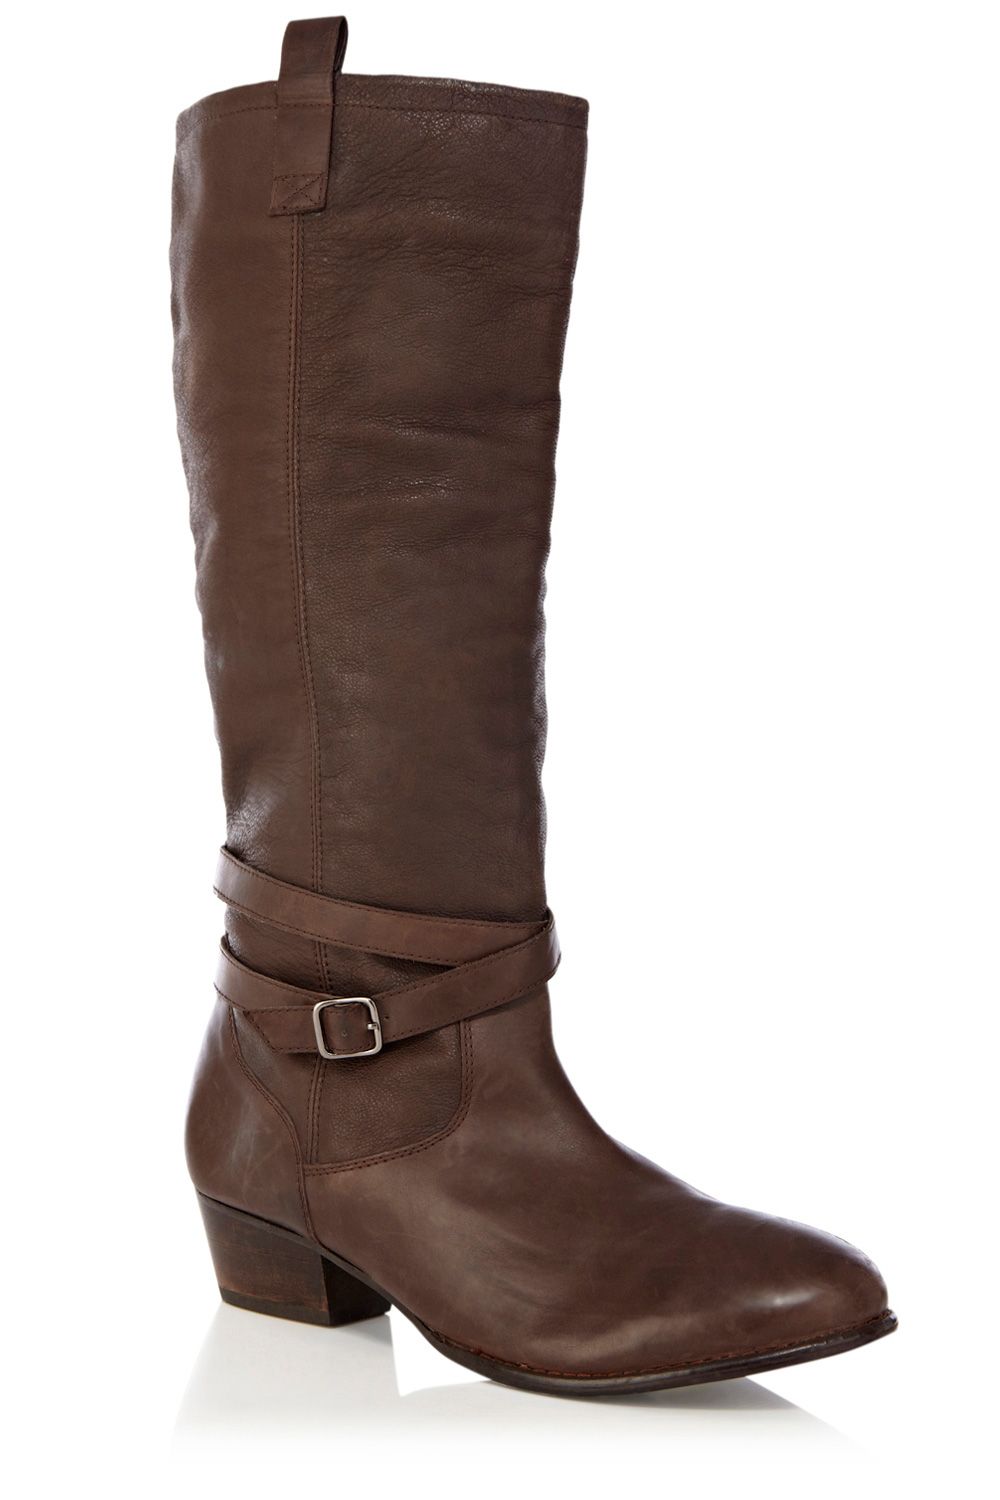 Oasis Ciara Casual Long Boot in Brown | Lyst